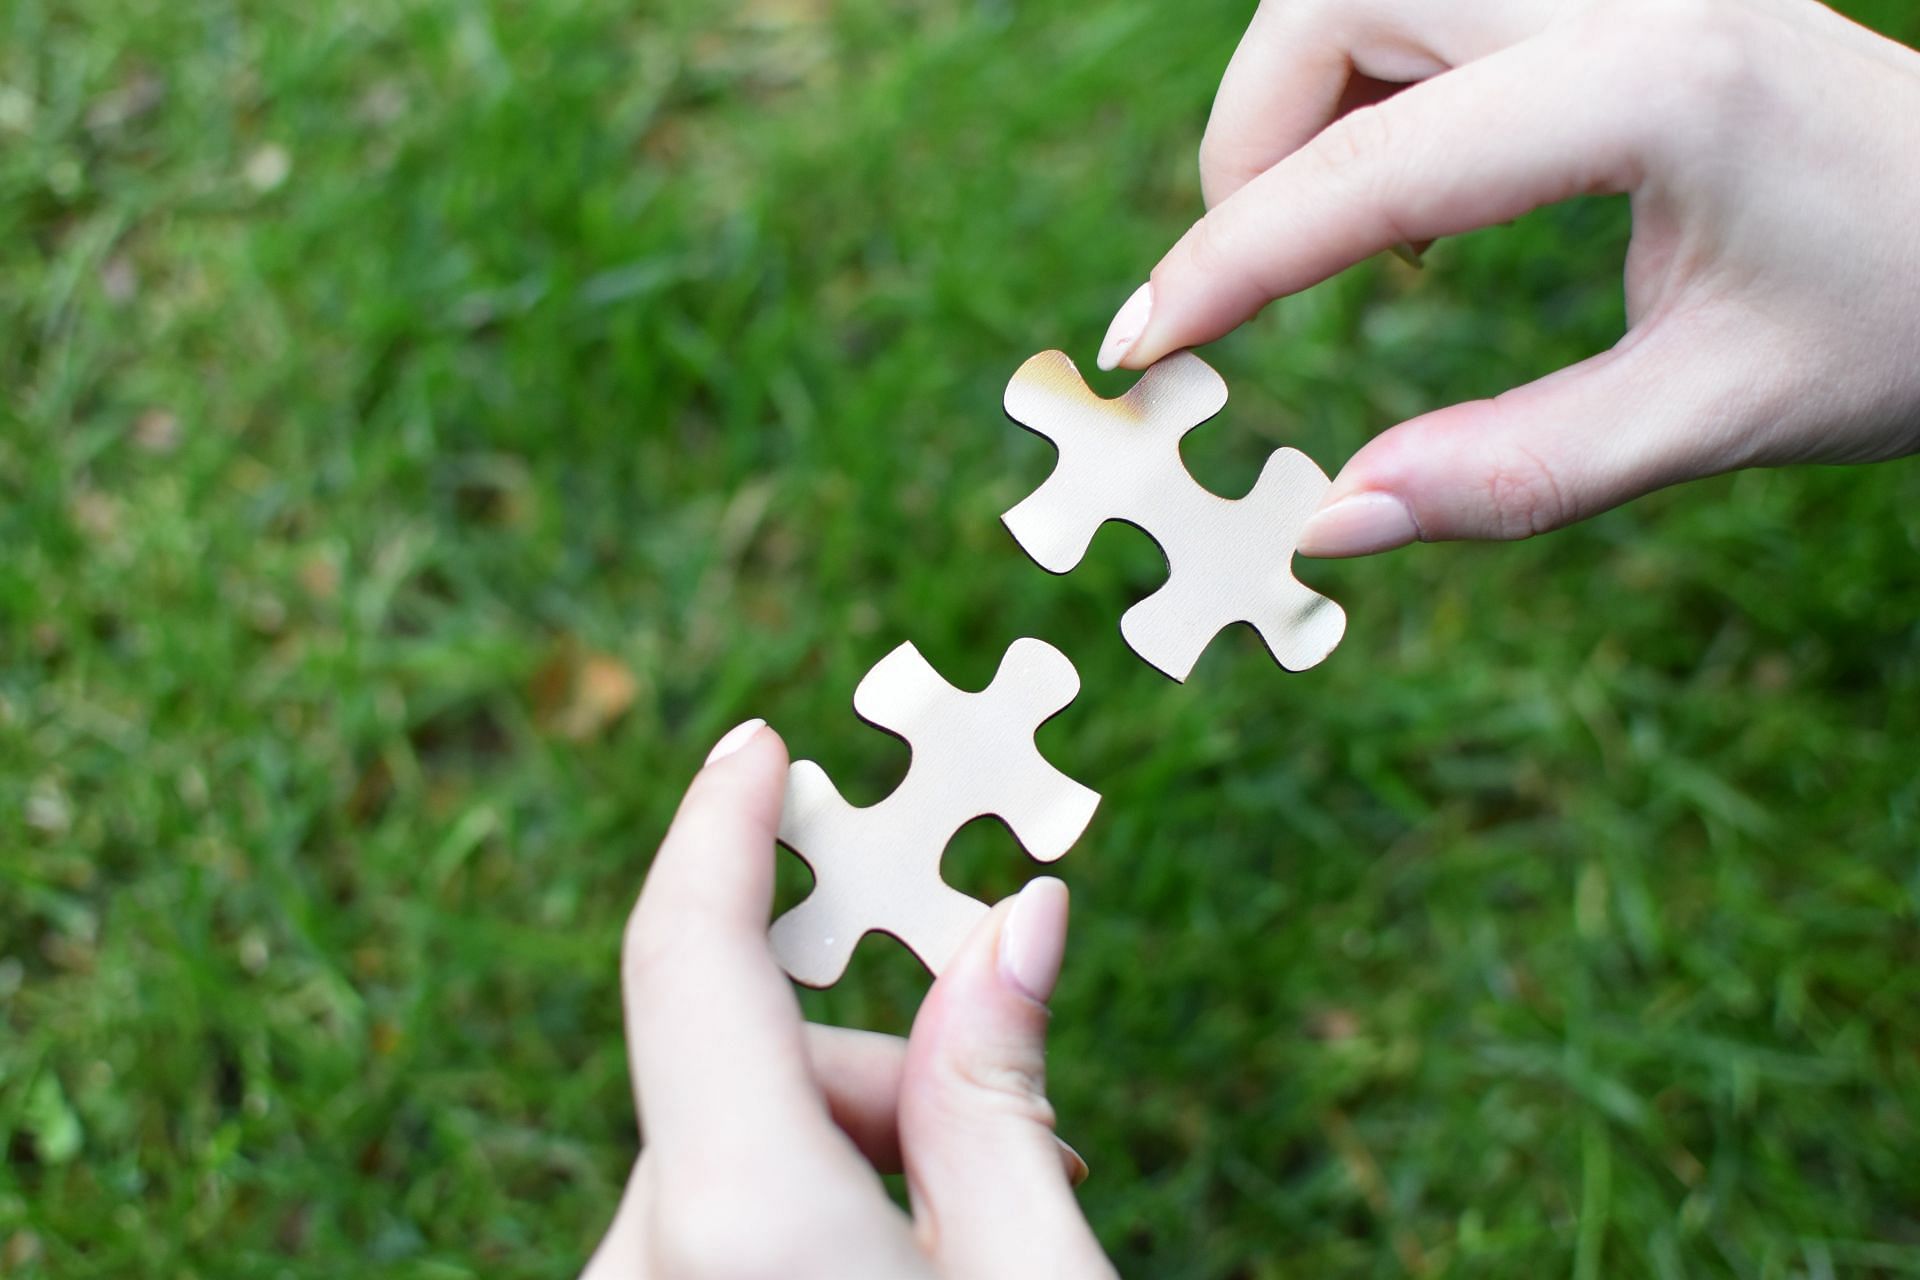 Playing jigsaw puzzle can sharpen your memory skills (Image via Unsplash/Vardan Papikyan)